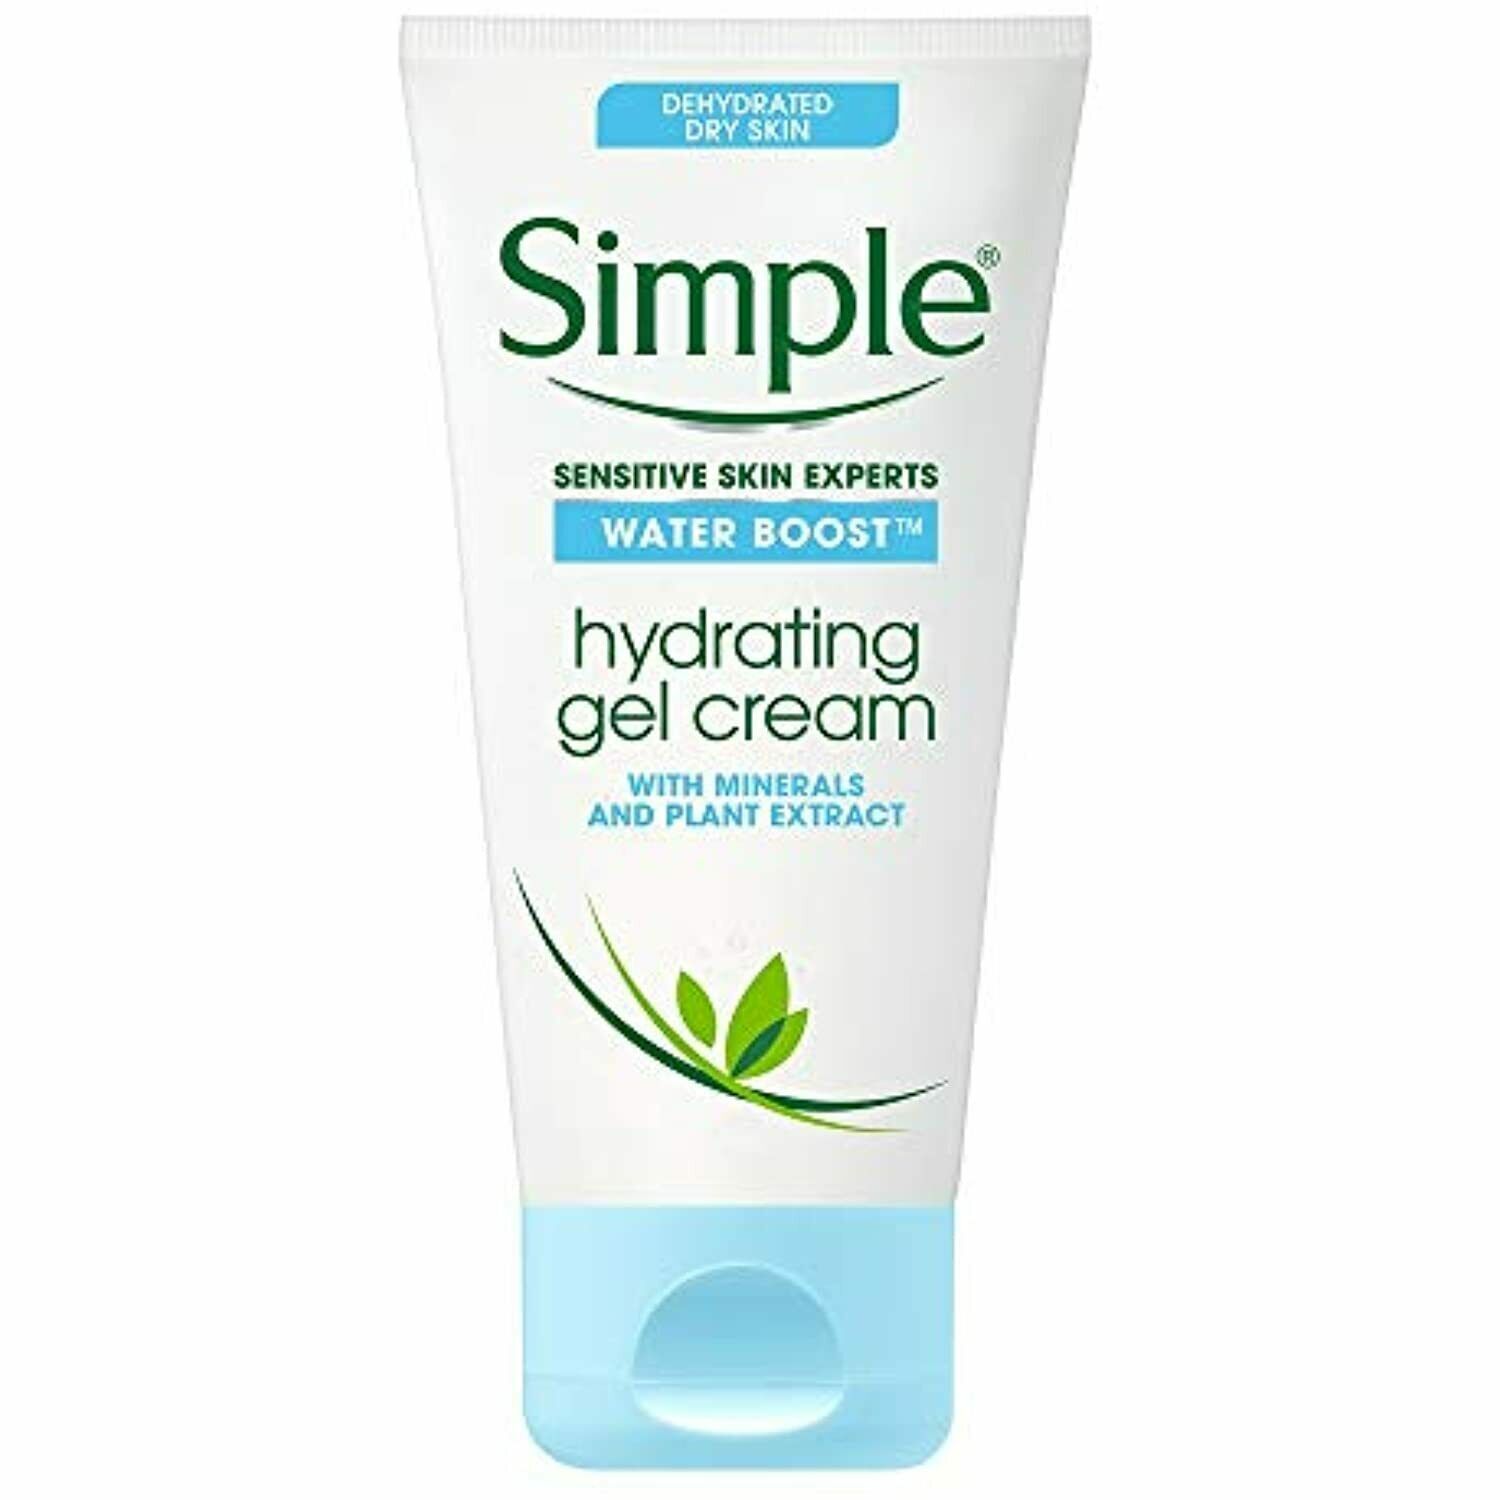 Simple Face Moisturizer Gel Cream for Sensitive Skin. Water Boost Ultra Light